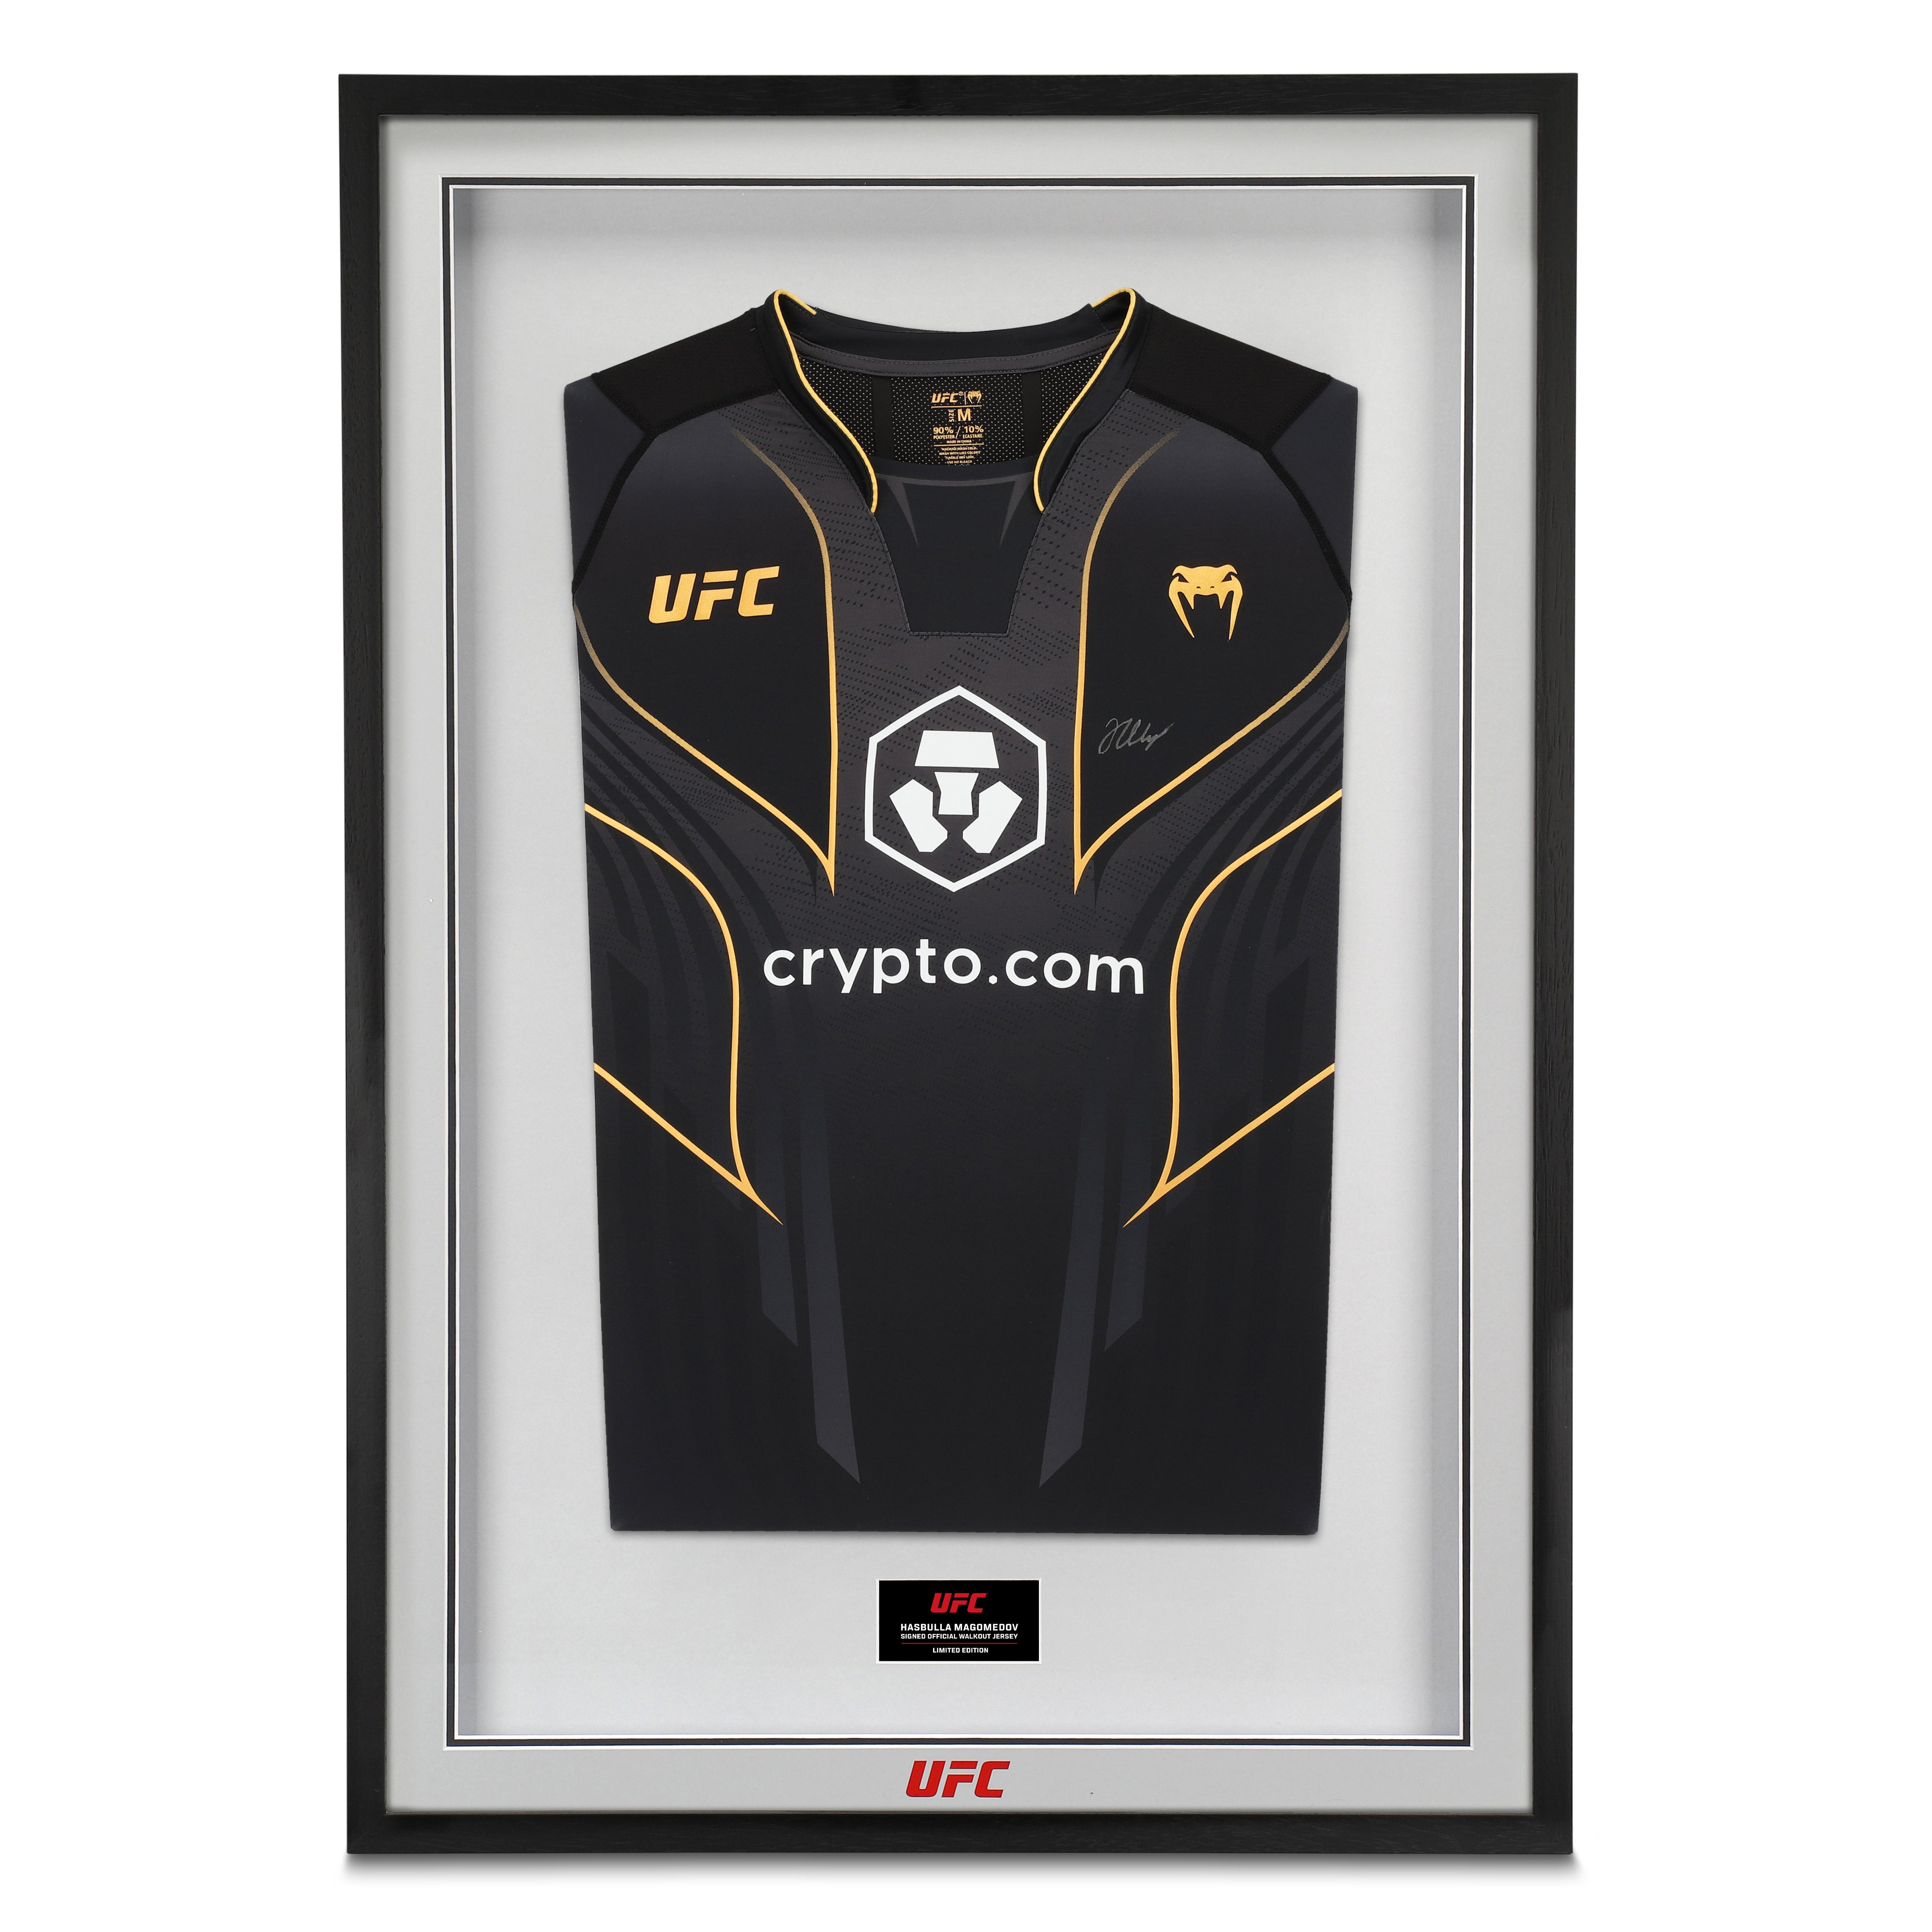 UFC  Venum Authentic Adrenaline walkout jersey is available now